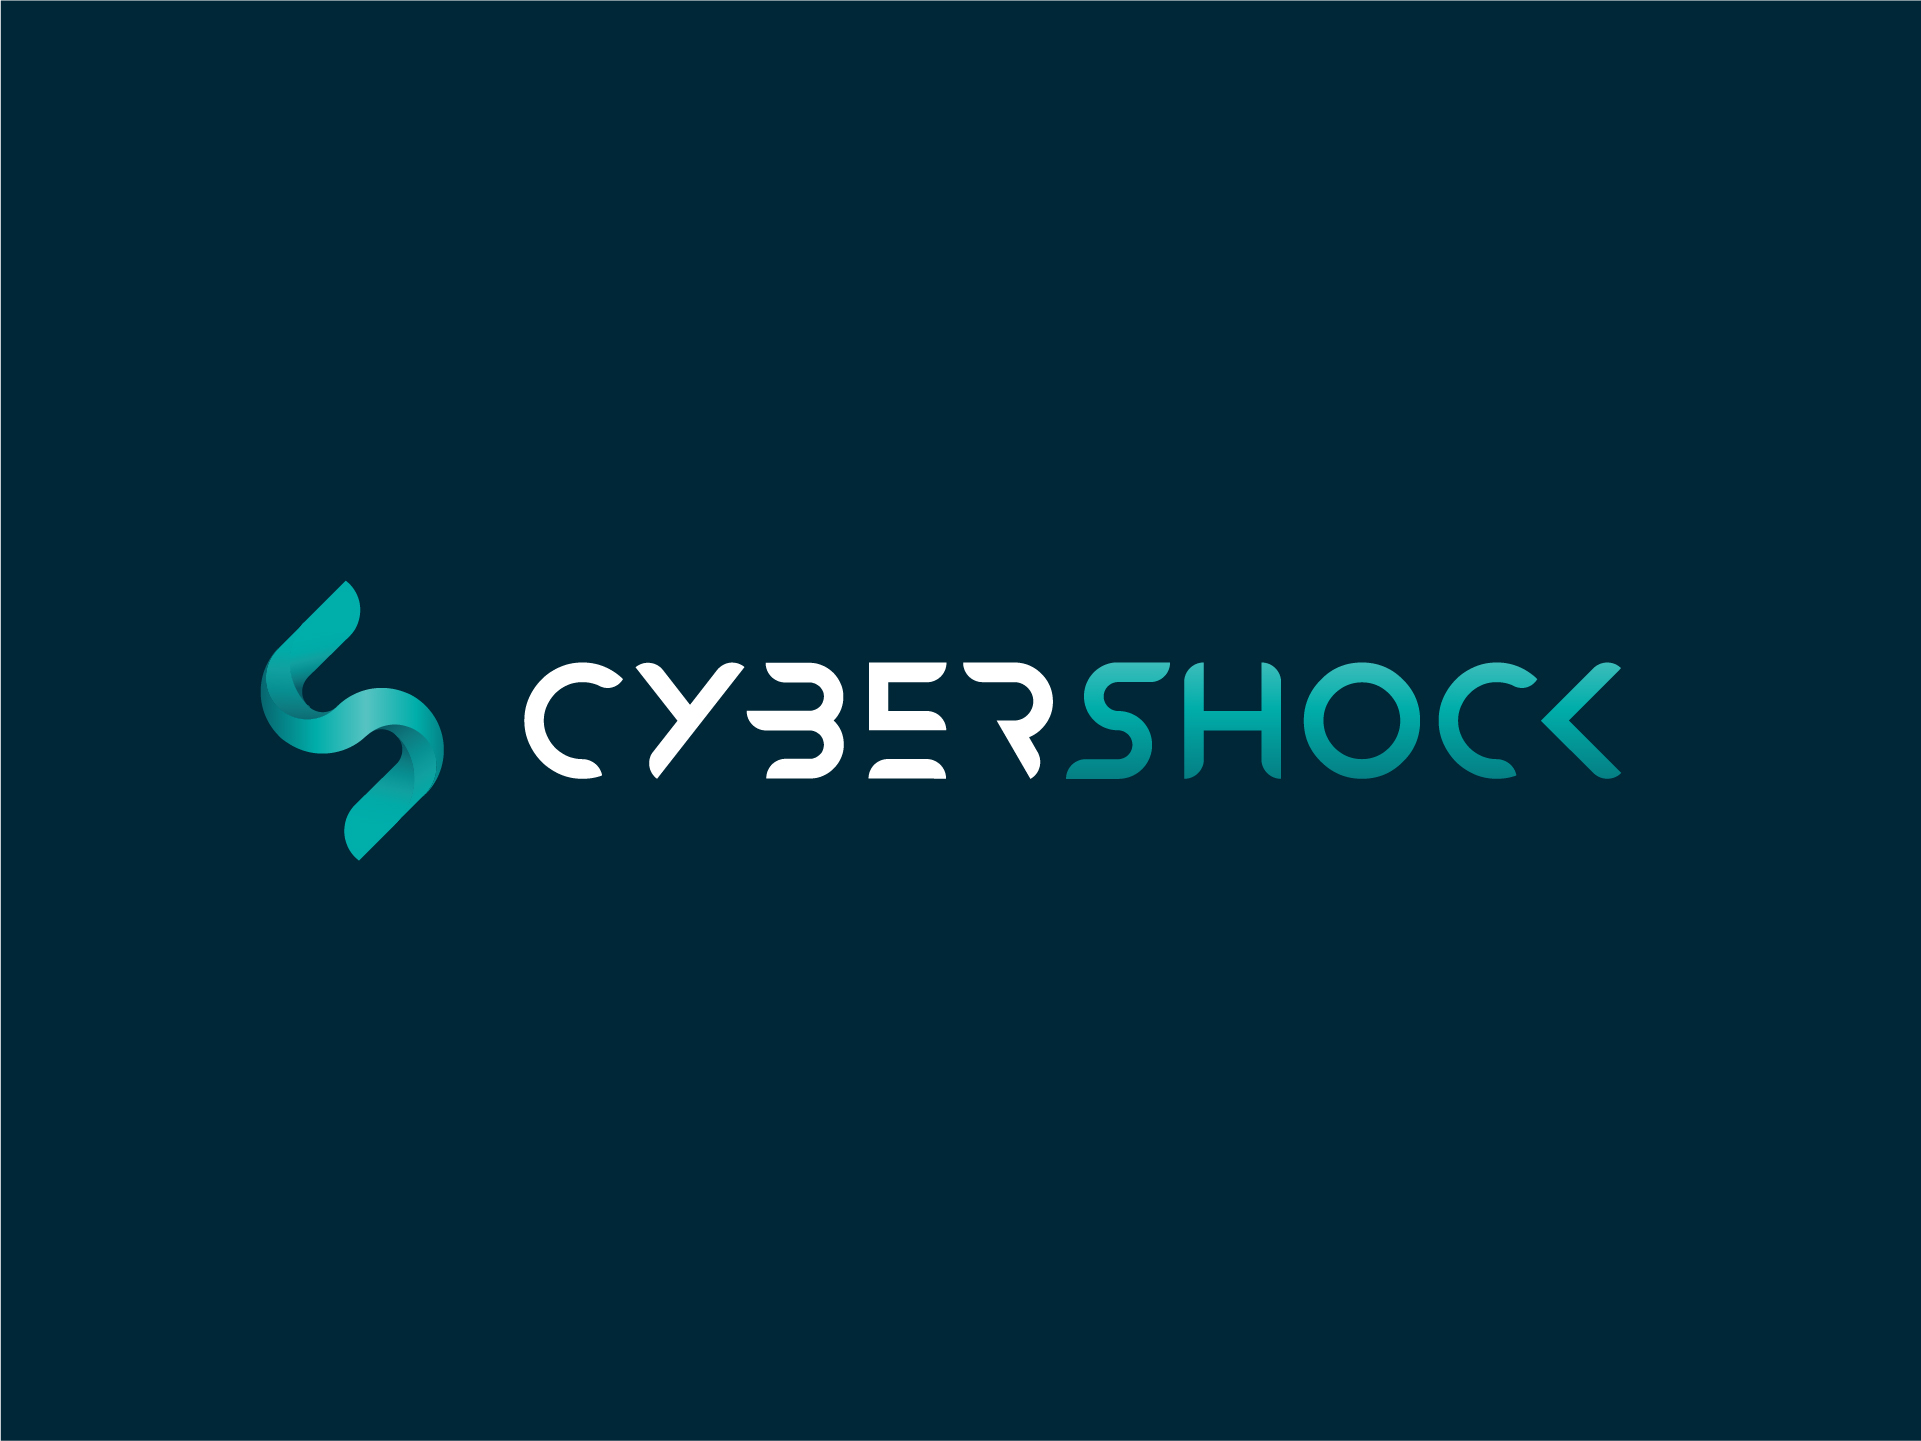 Cybershock logo lock up